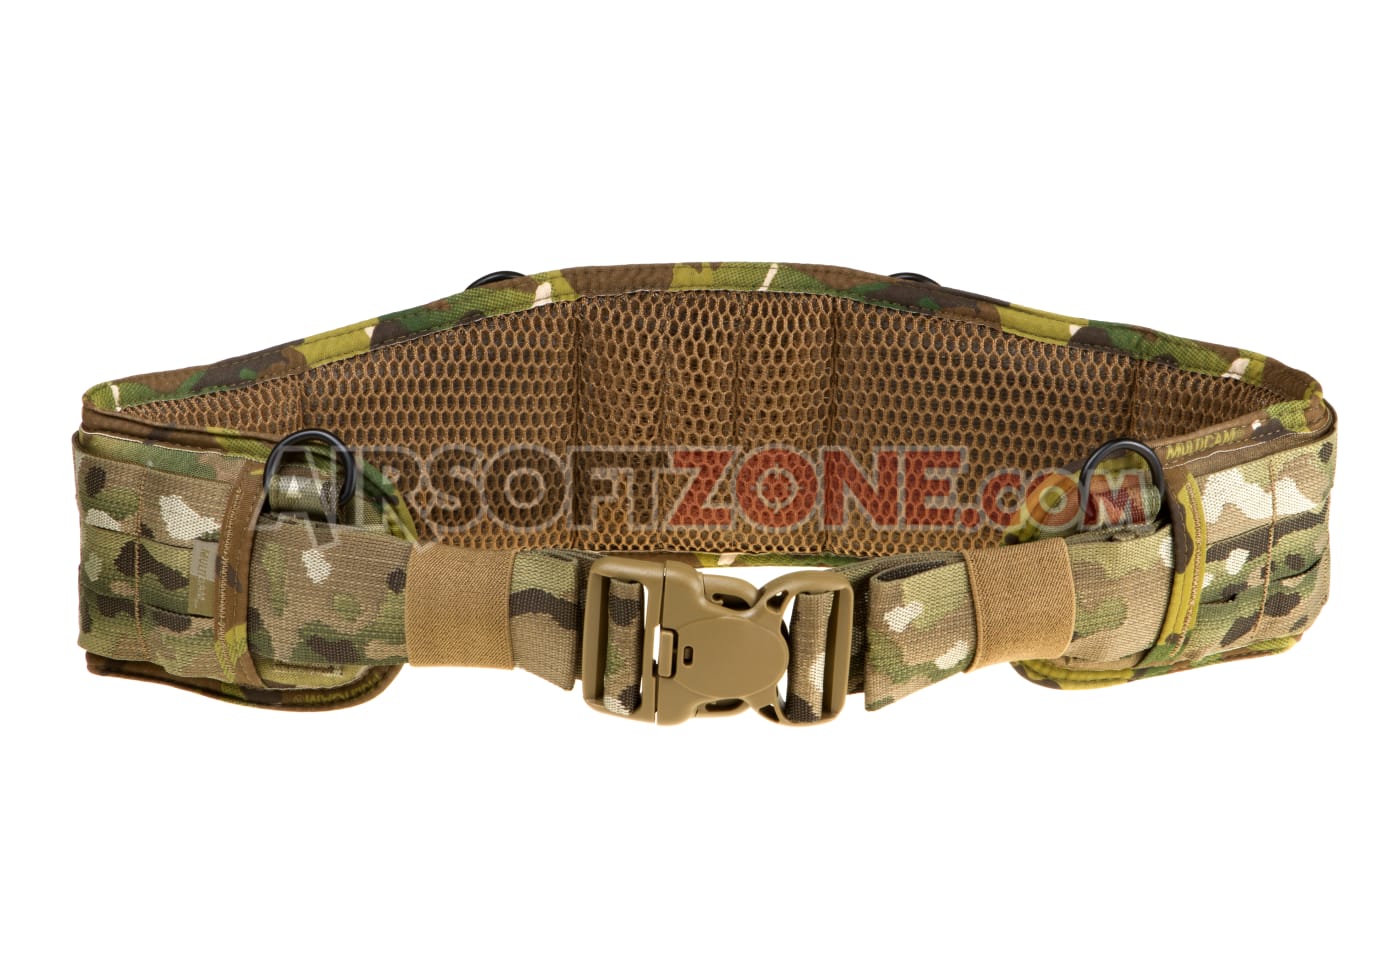 EMERSONGEAR Molle Padded Patrol Belt Tactical Hunting Men Airsoft Belt  Combat Military Army Patrol Belt Multicam